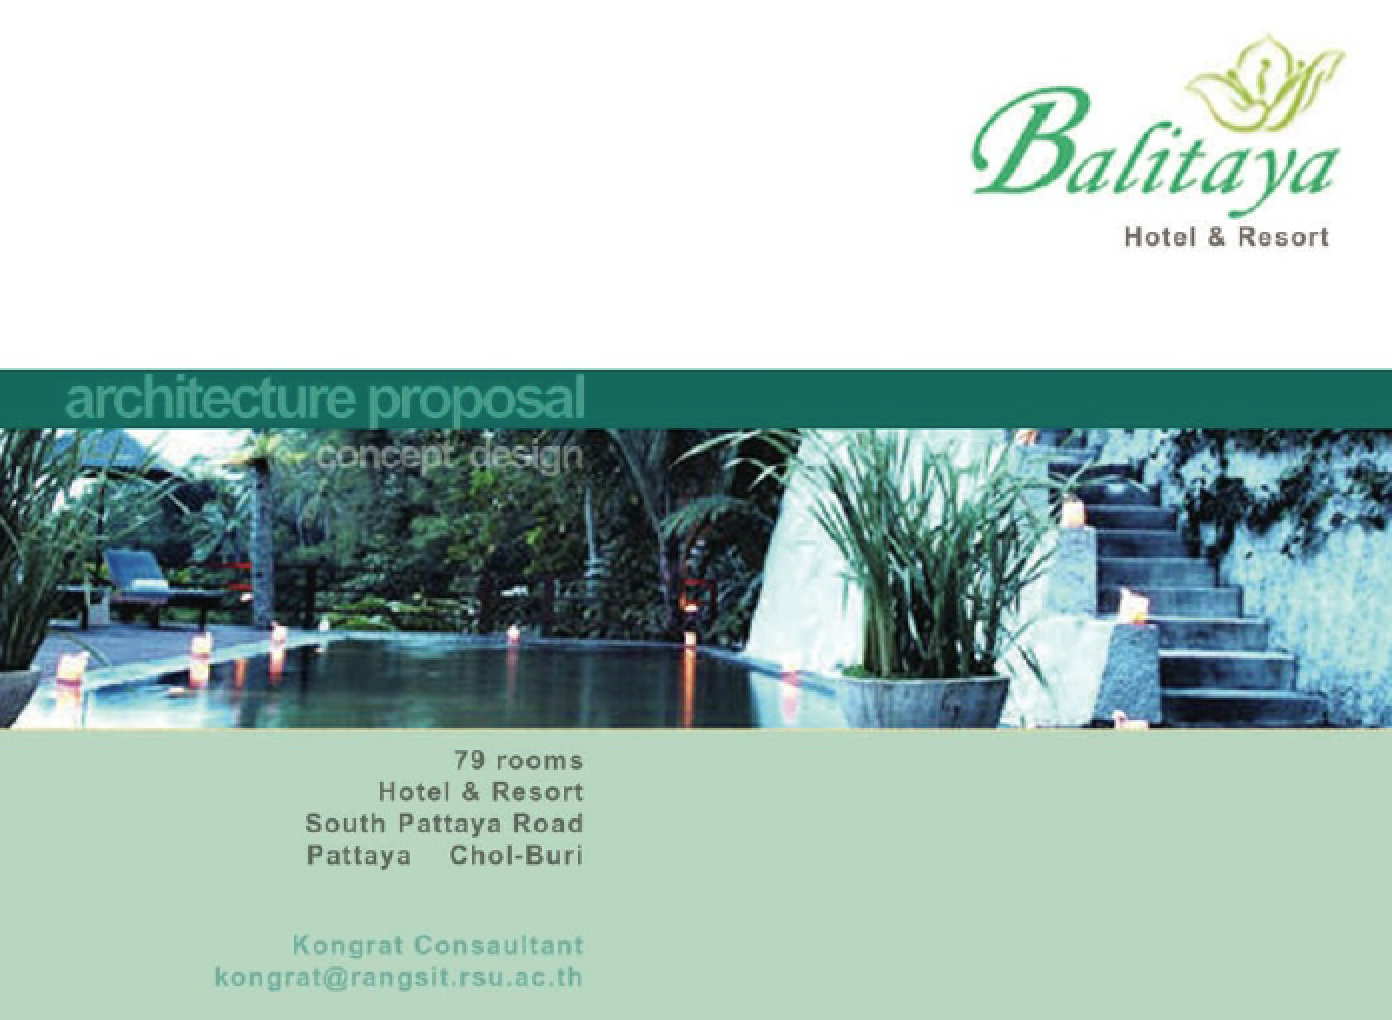 Balitaya Resort Mood and Conceptd